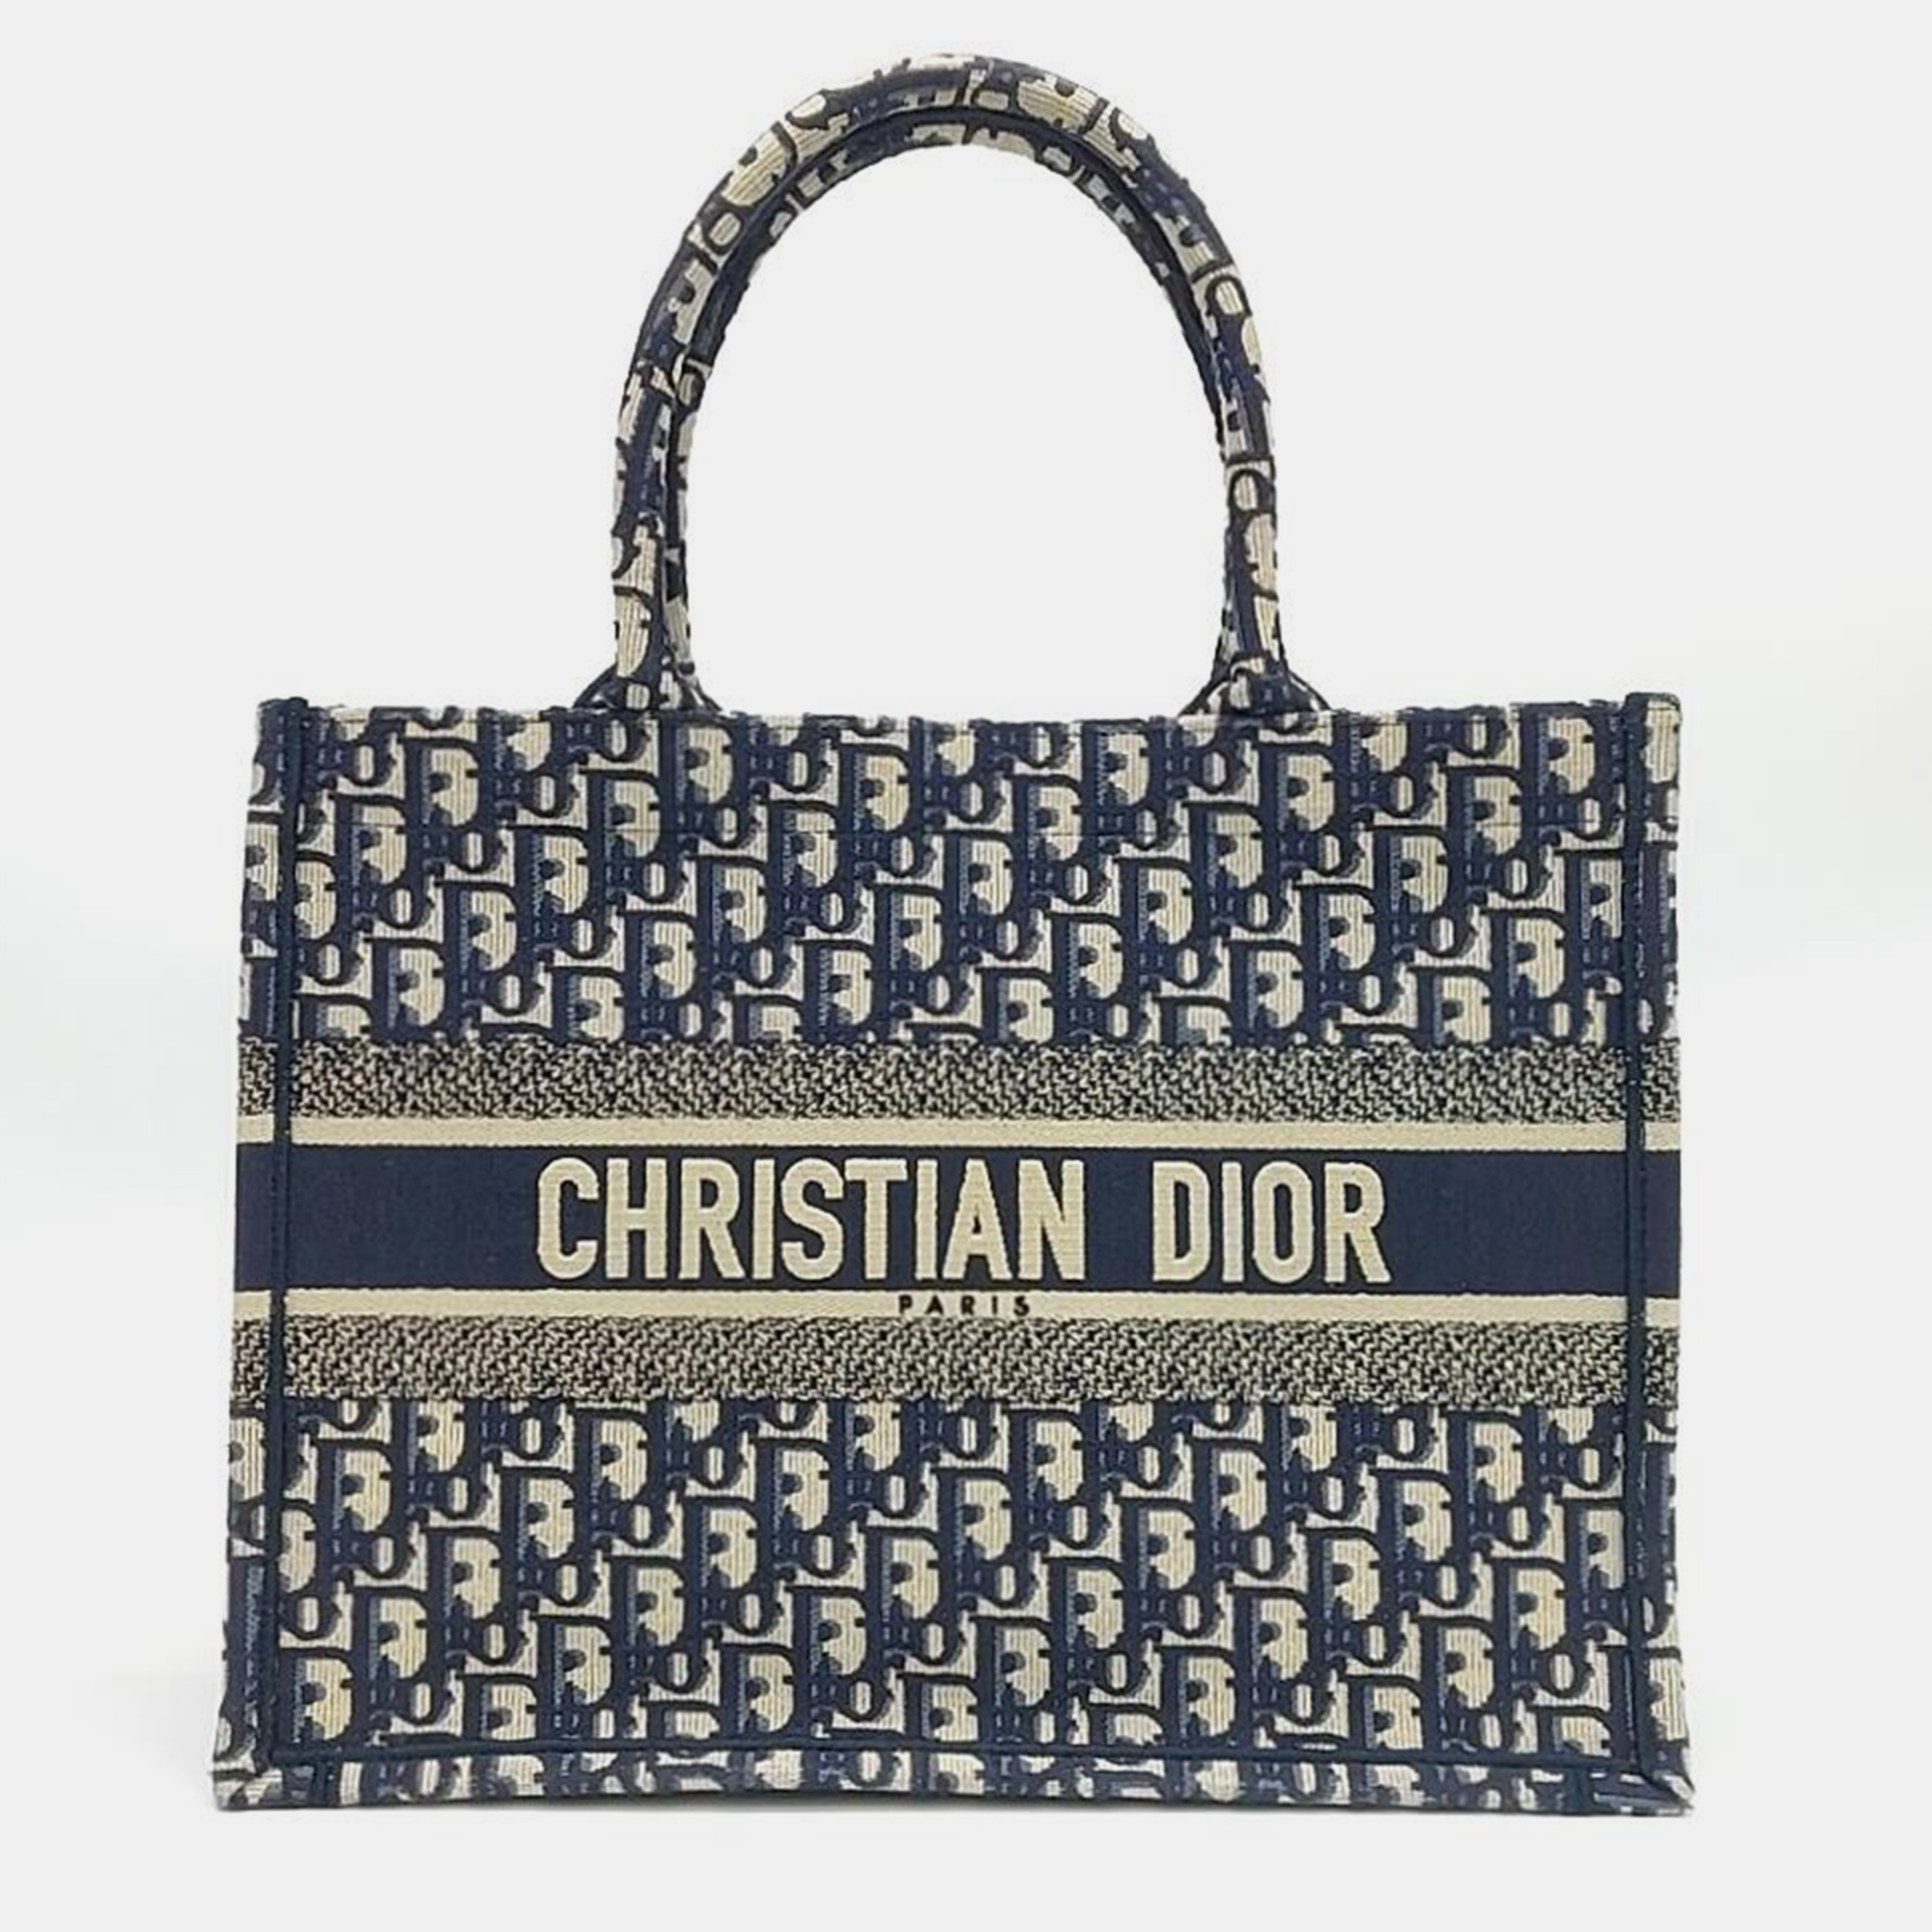 Christian dior oblique book tote 36 m1296zriw handbag